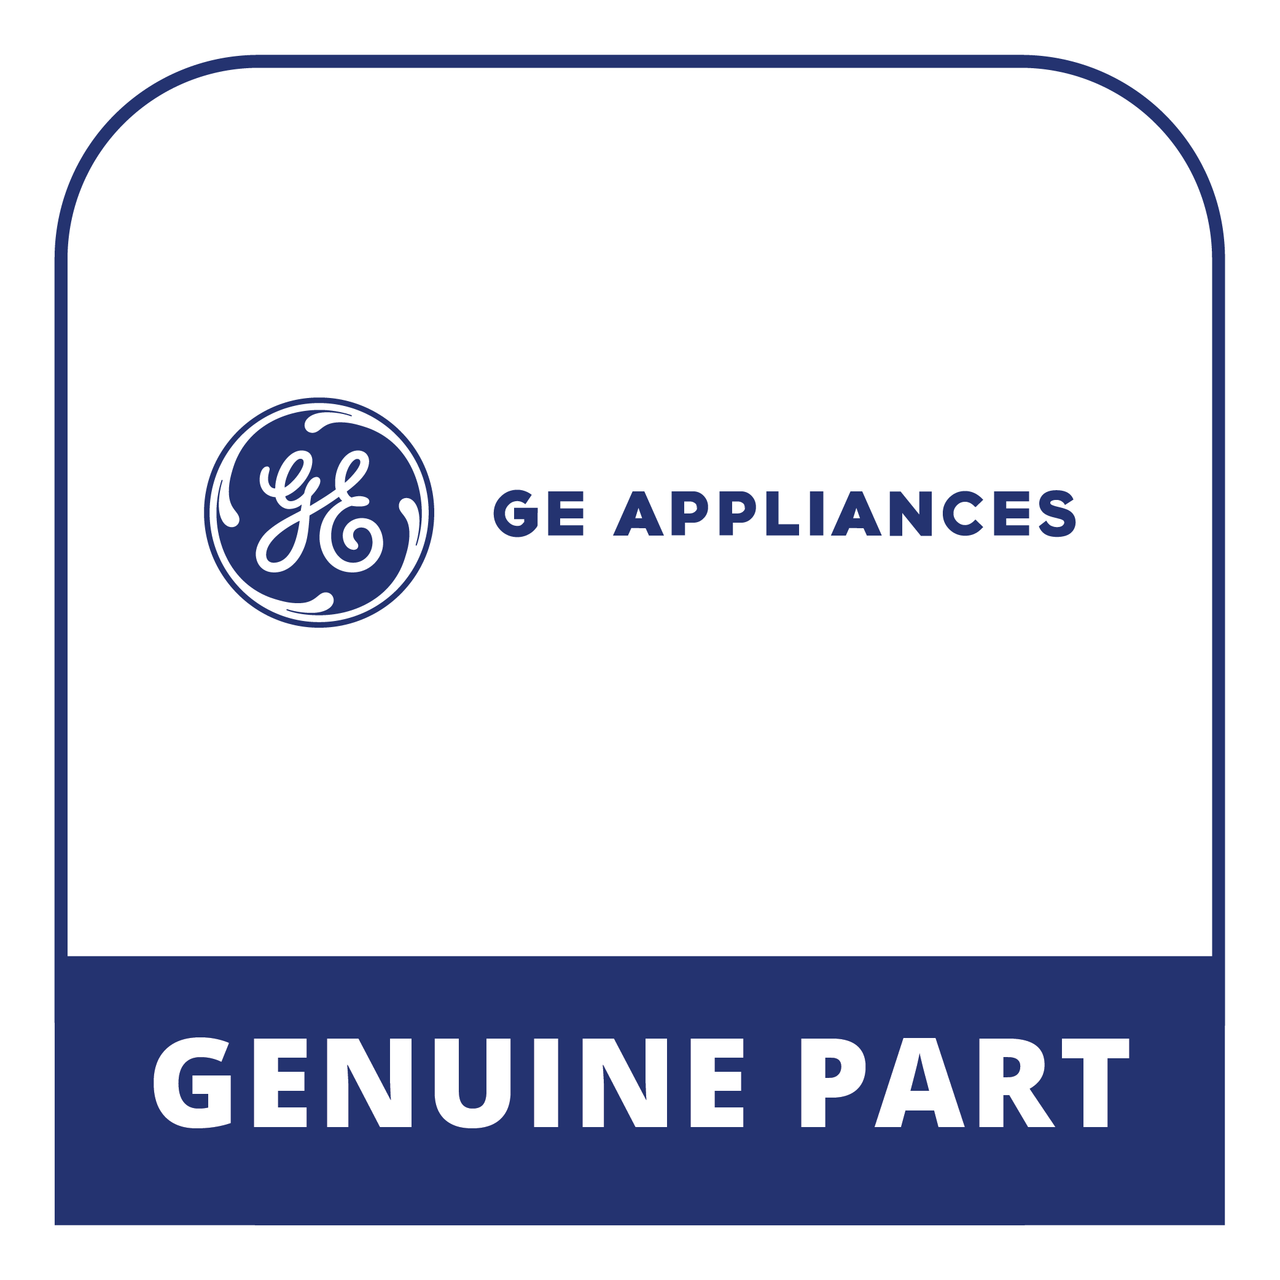 GE Appliances WR49X10144 - Slide Brkt Asm Kit 7 In - Genuine Part